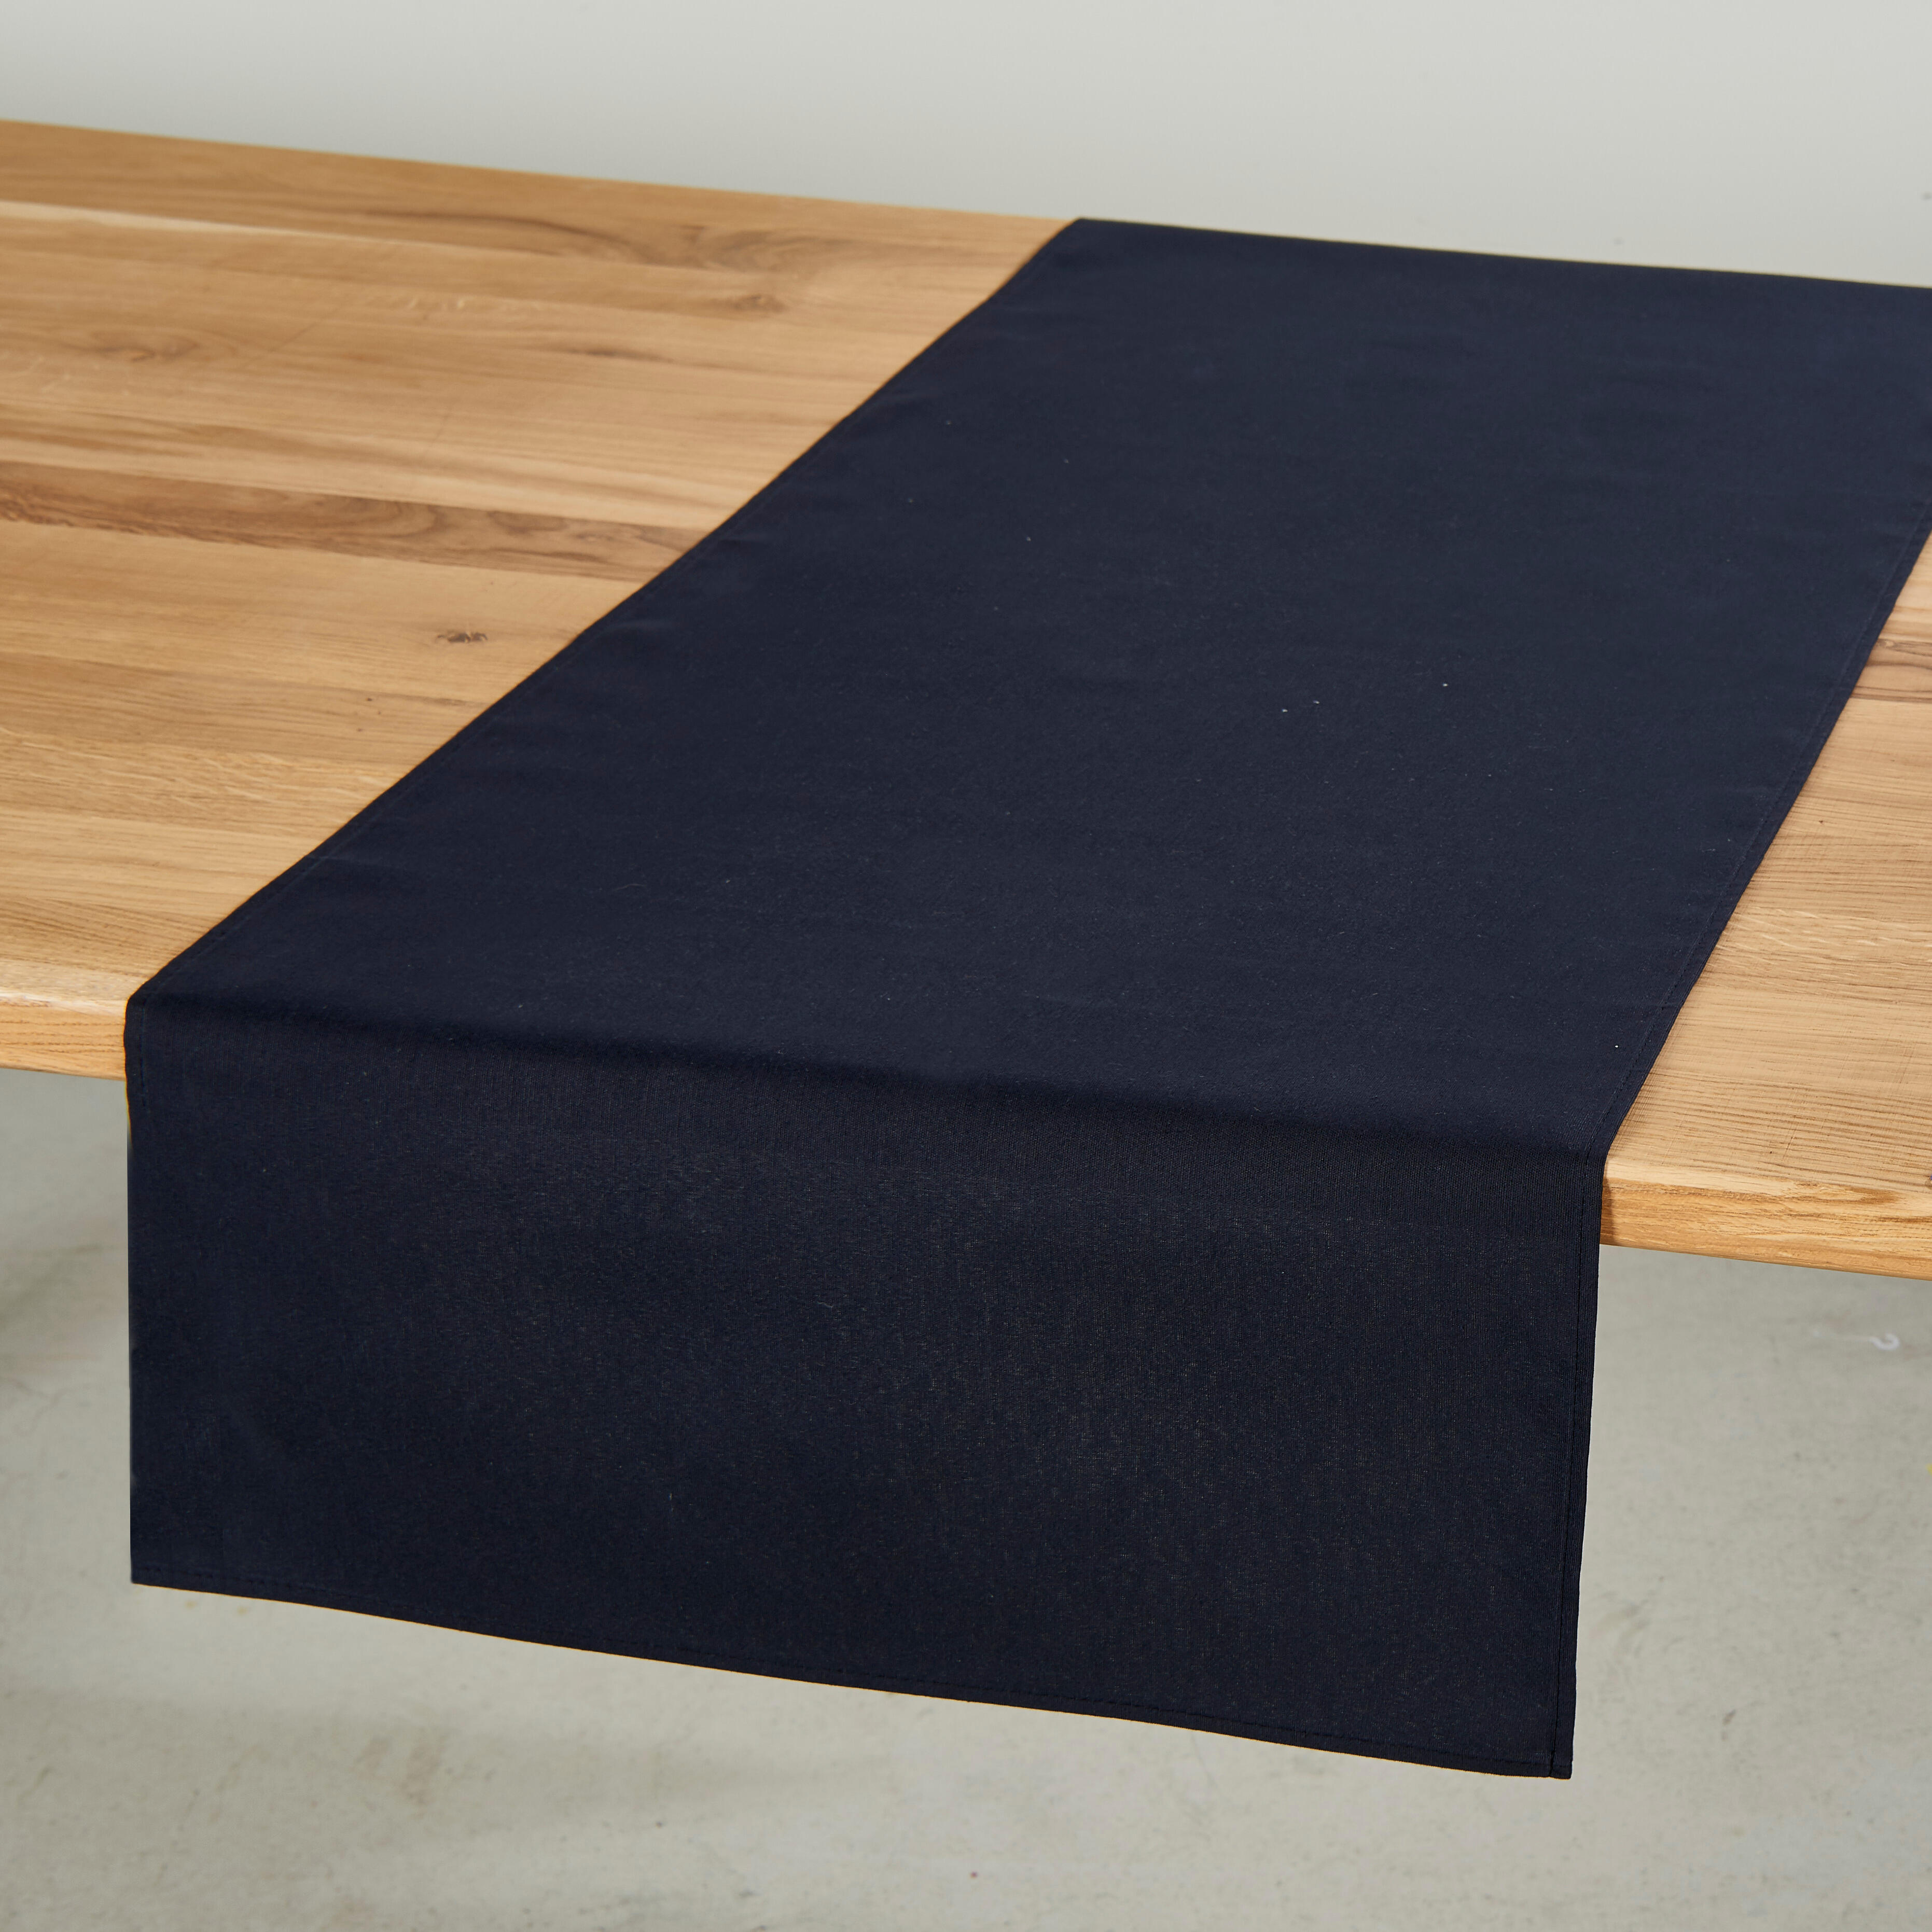 Chemin de table Gioele en coton 45x200, Noir